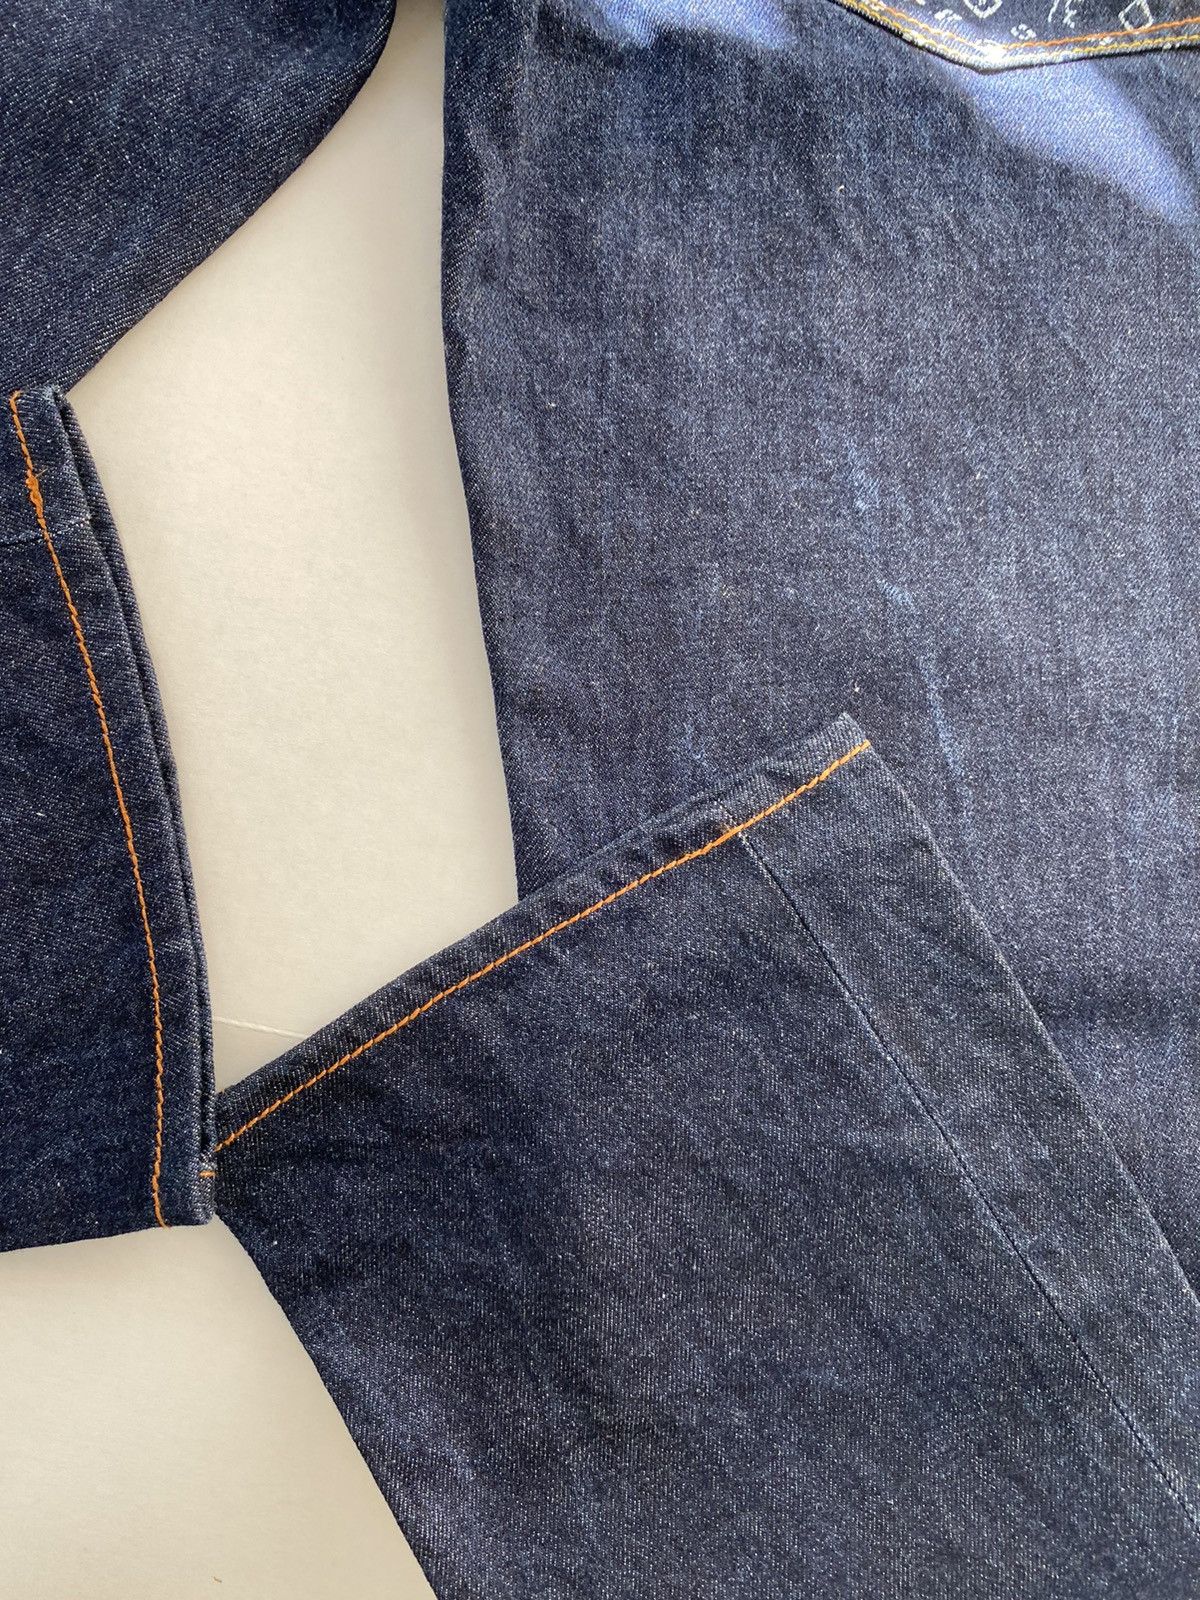 Vintage Vintage Evisu raw denim jeans Size US 30 / EU 46 - 6 Thumbnail